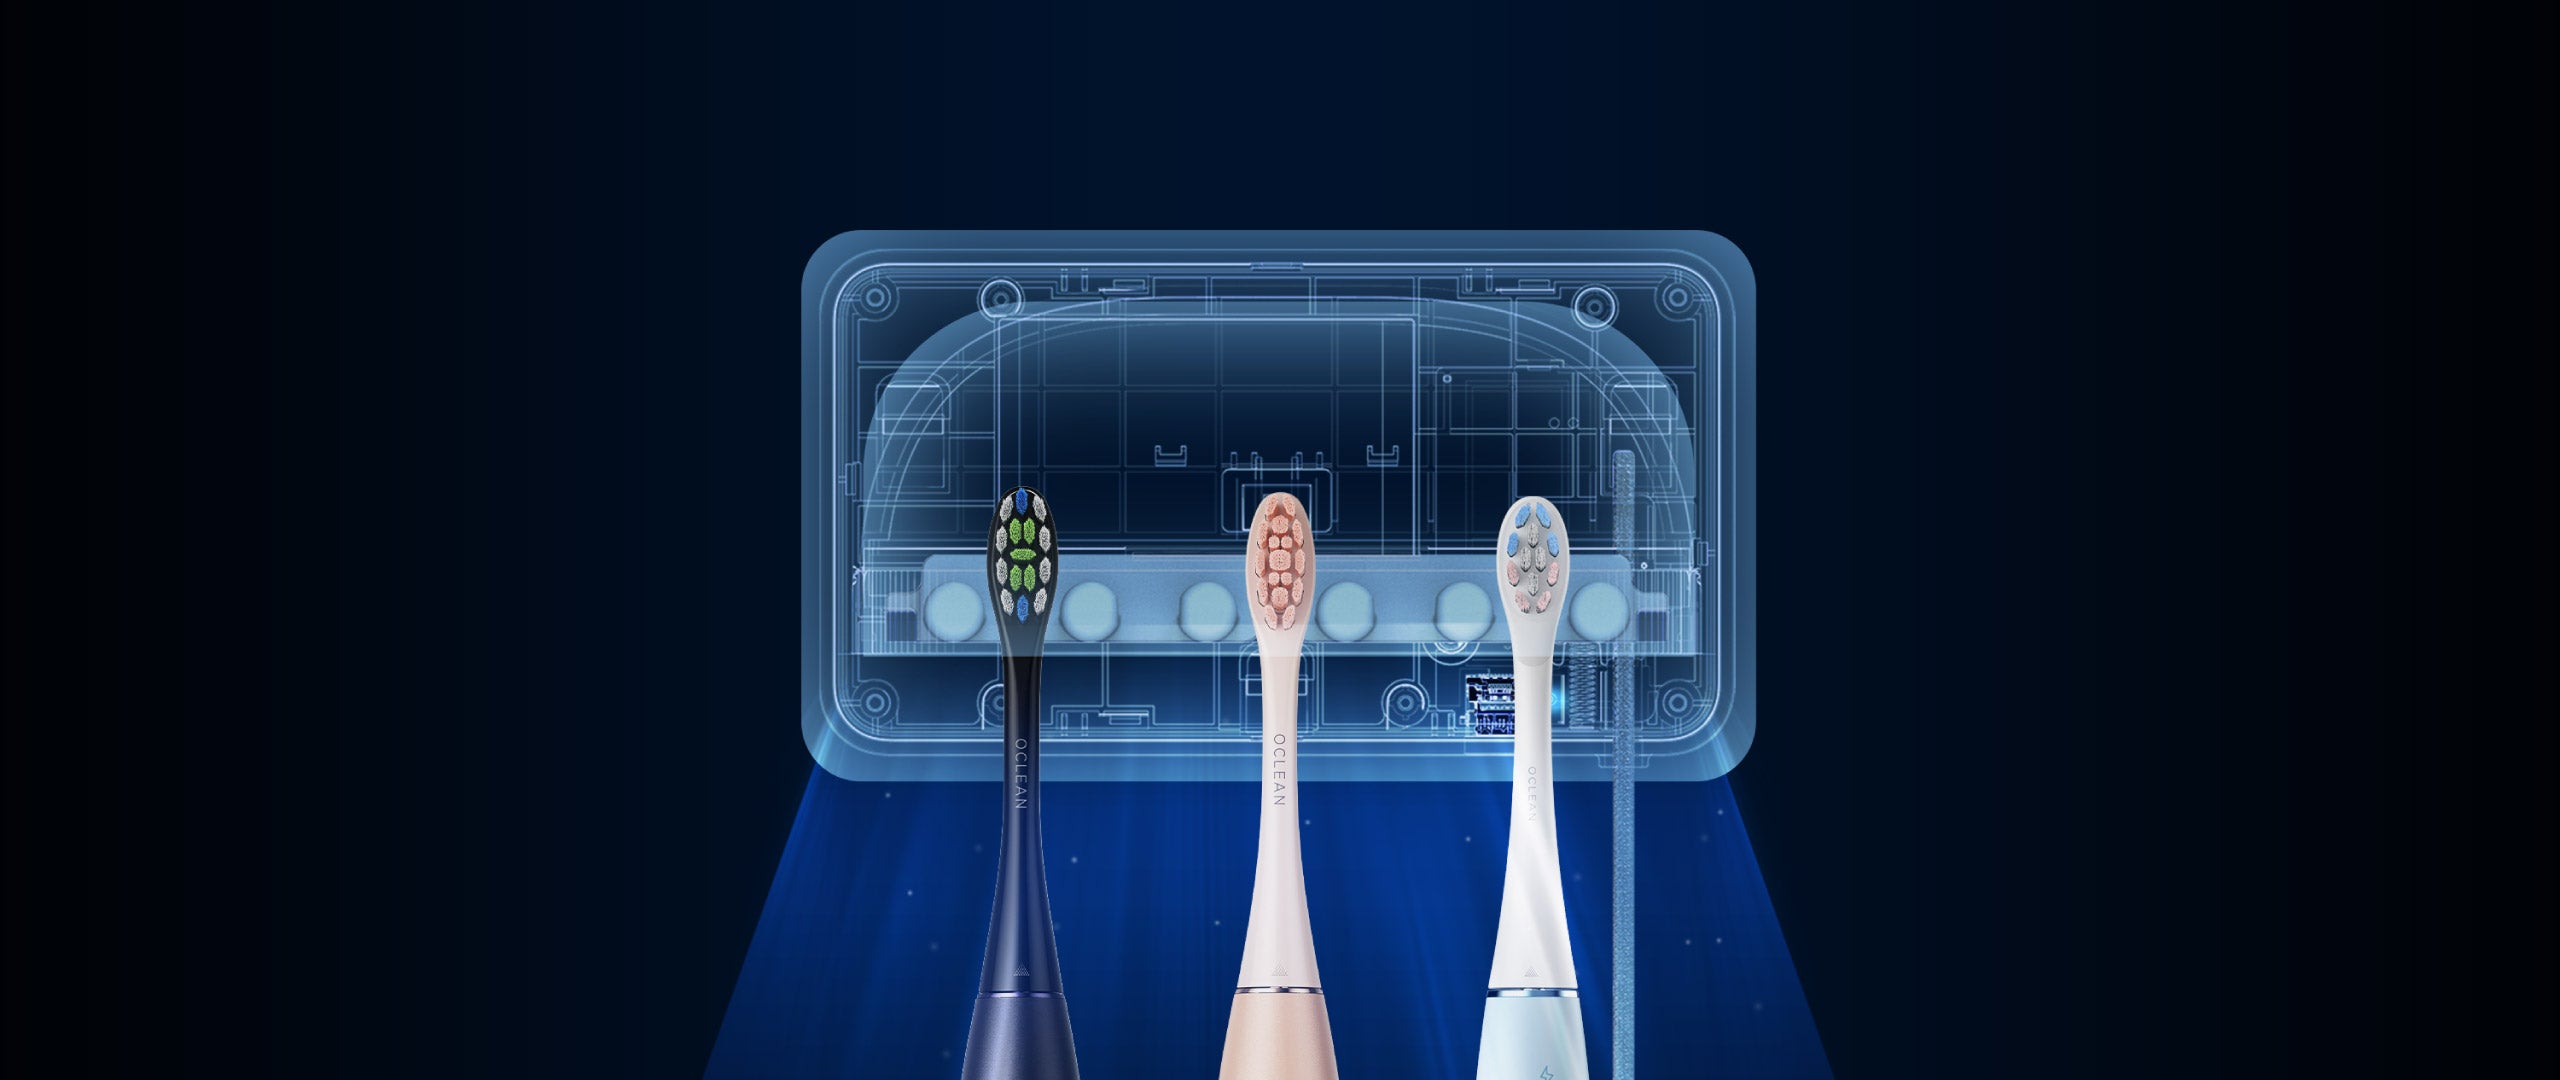 Oclean S1 Toothbrush UVC Sanitizer-Toothbrush Sanitizers-Oclean US Store